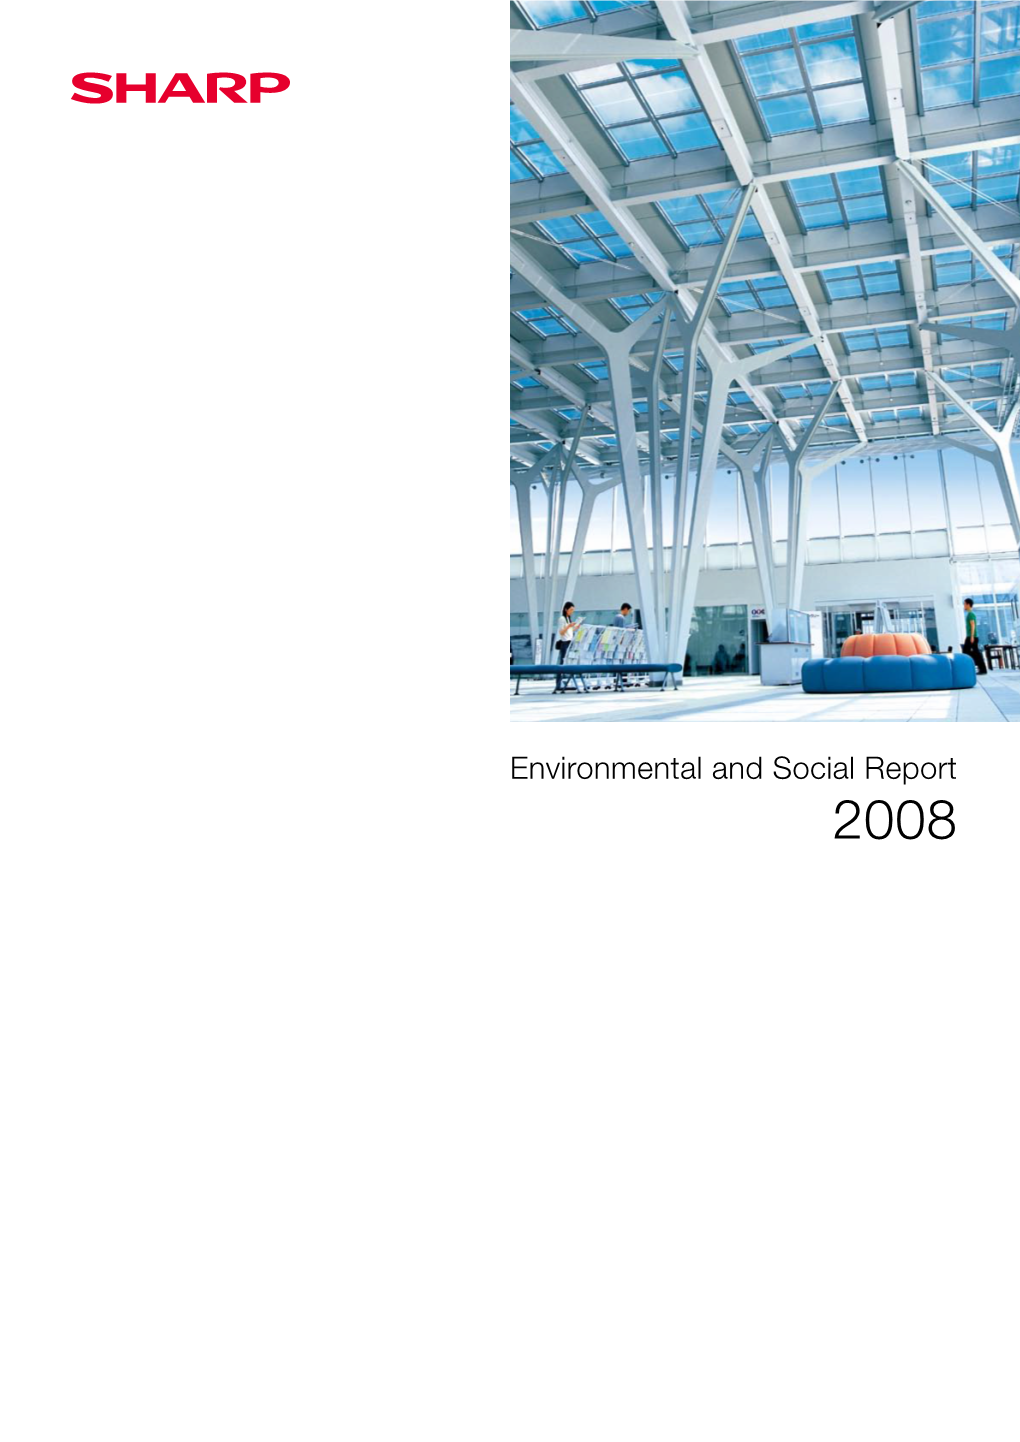 Environmental and Social Report 2008